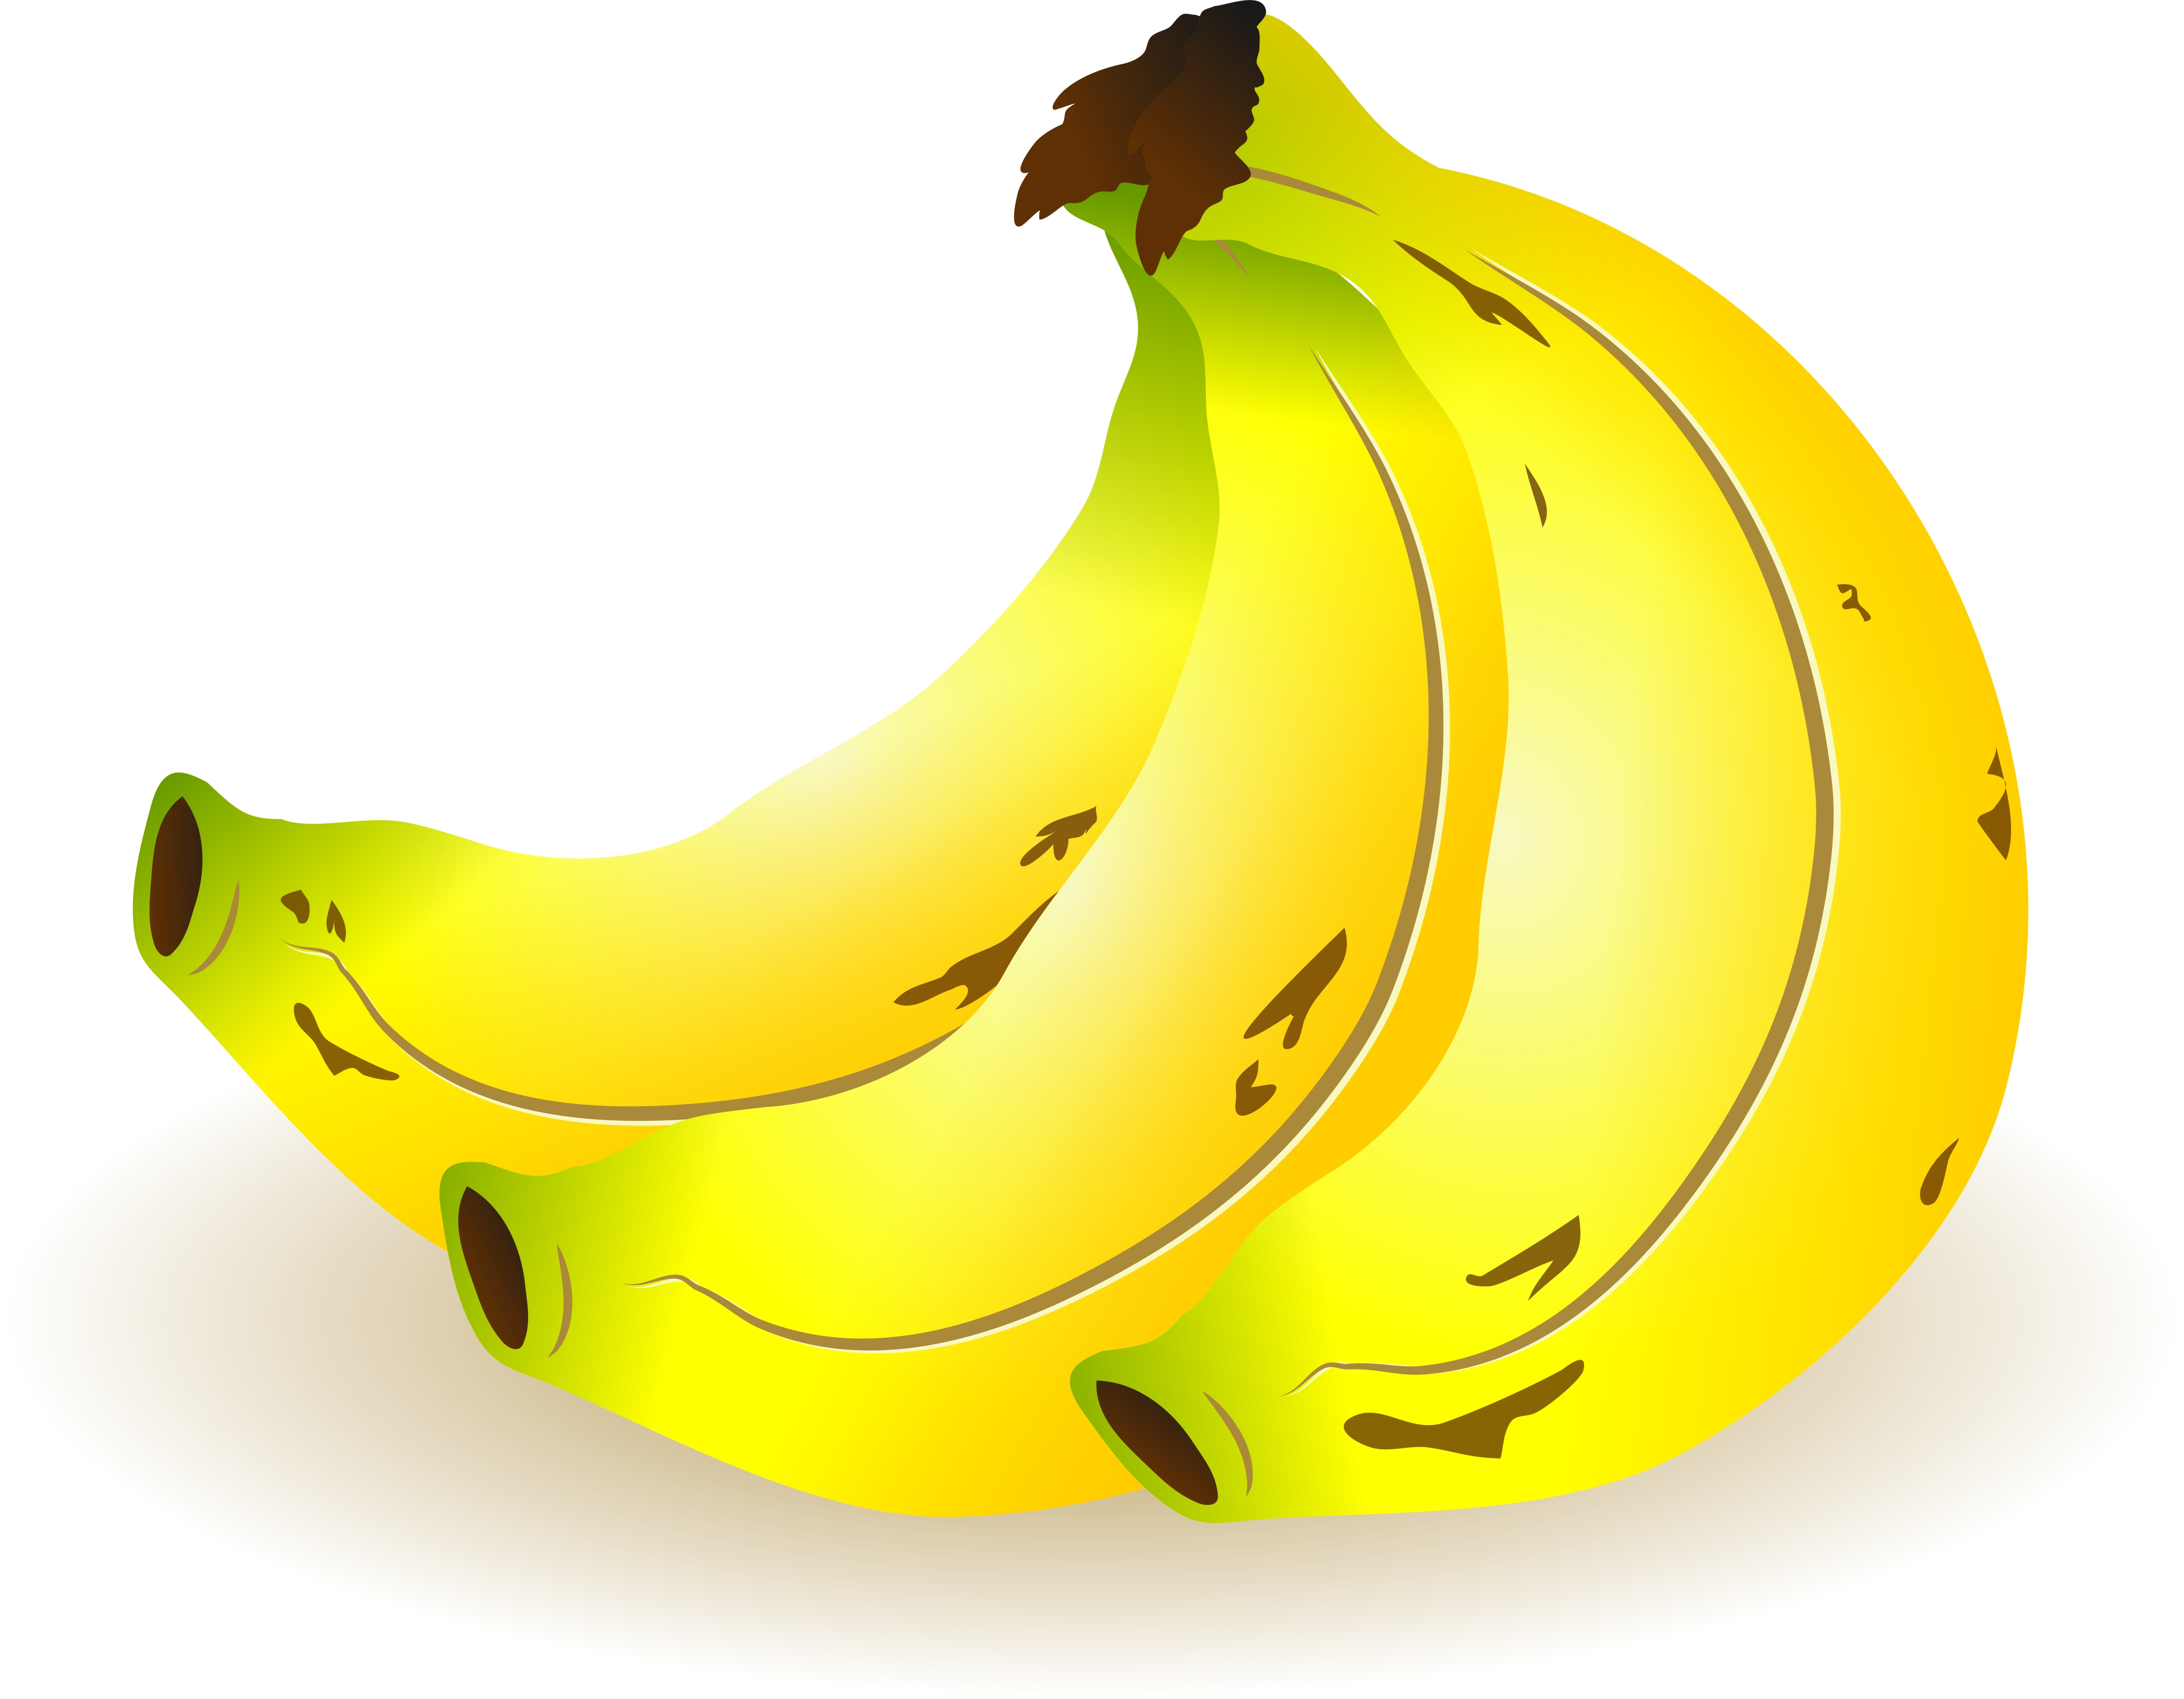 Bunch Of Bananas image - vector clip art online, royalty free ...